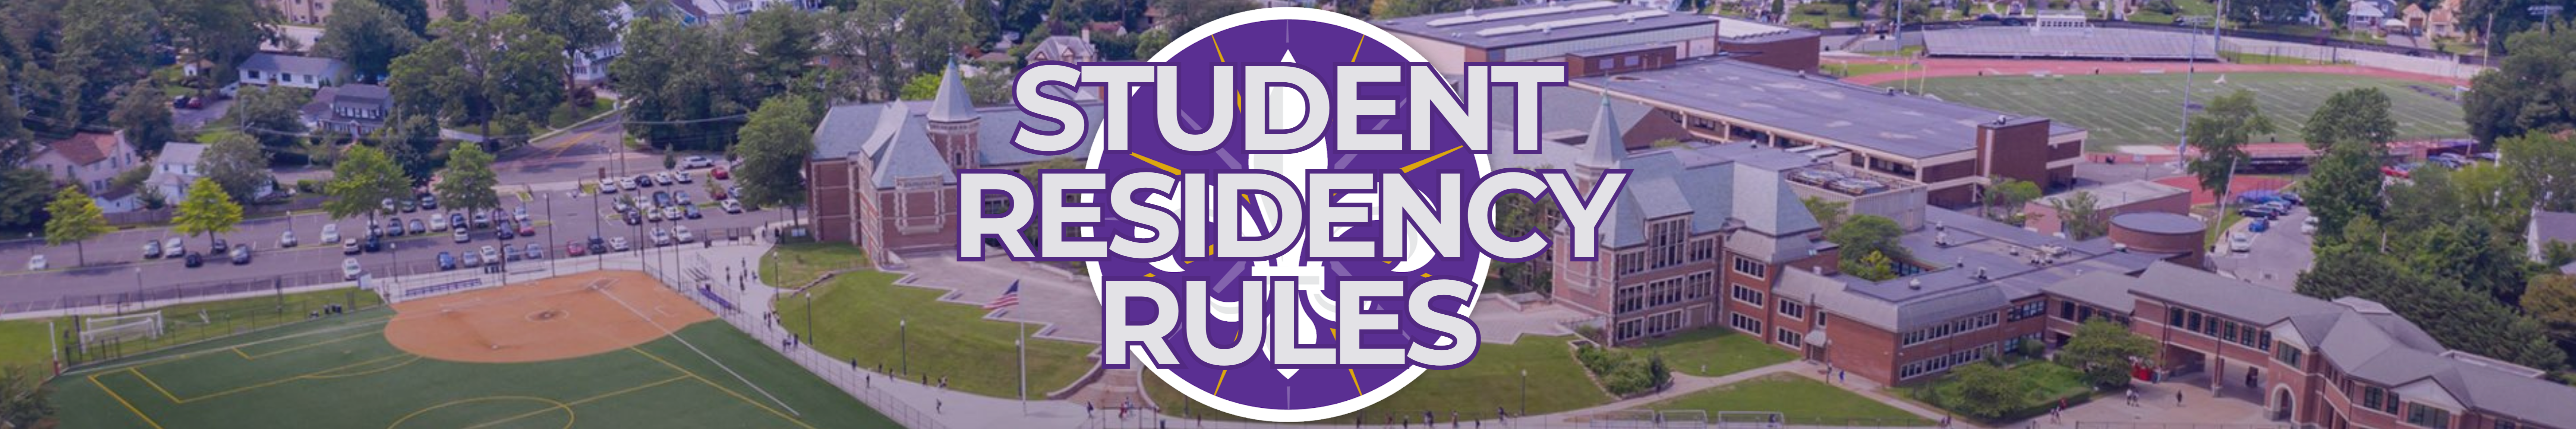 Student Residency Rules banner